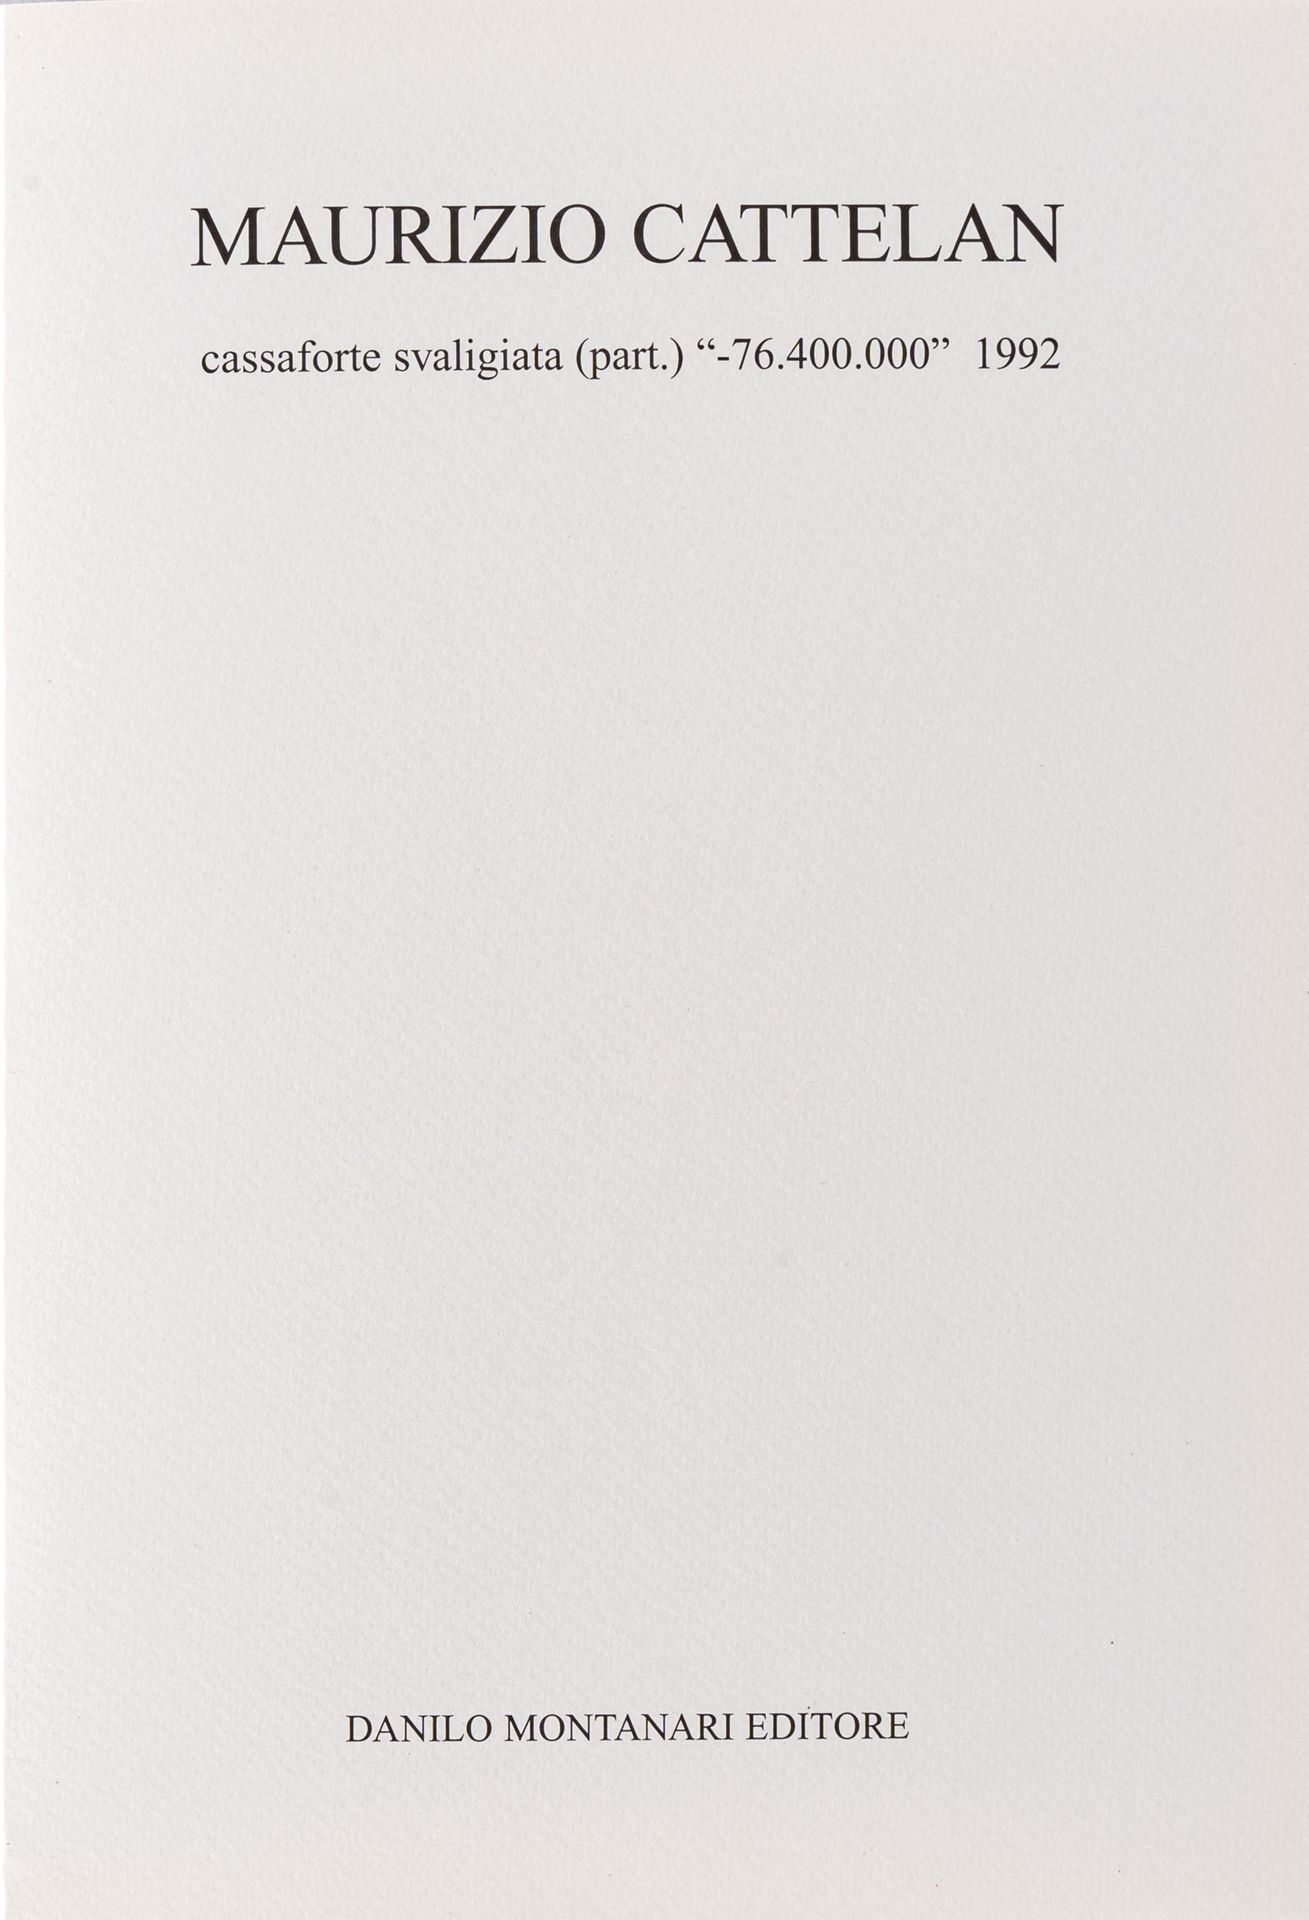 Maurizio Cattelan MAURIZIO CATTELAN

(1960)

-76.400.000 - cassaforte svaligiata&hellip;